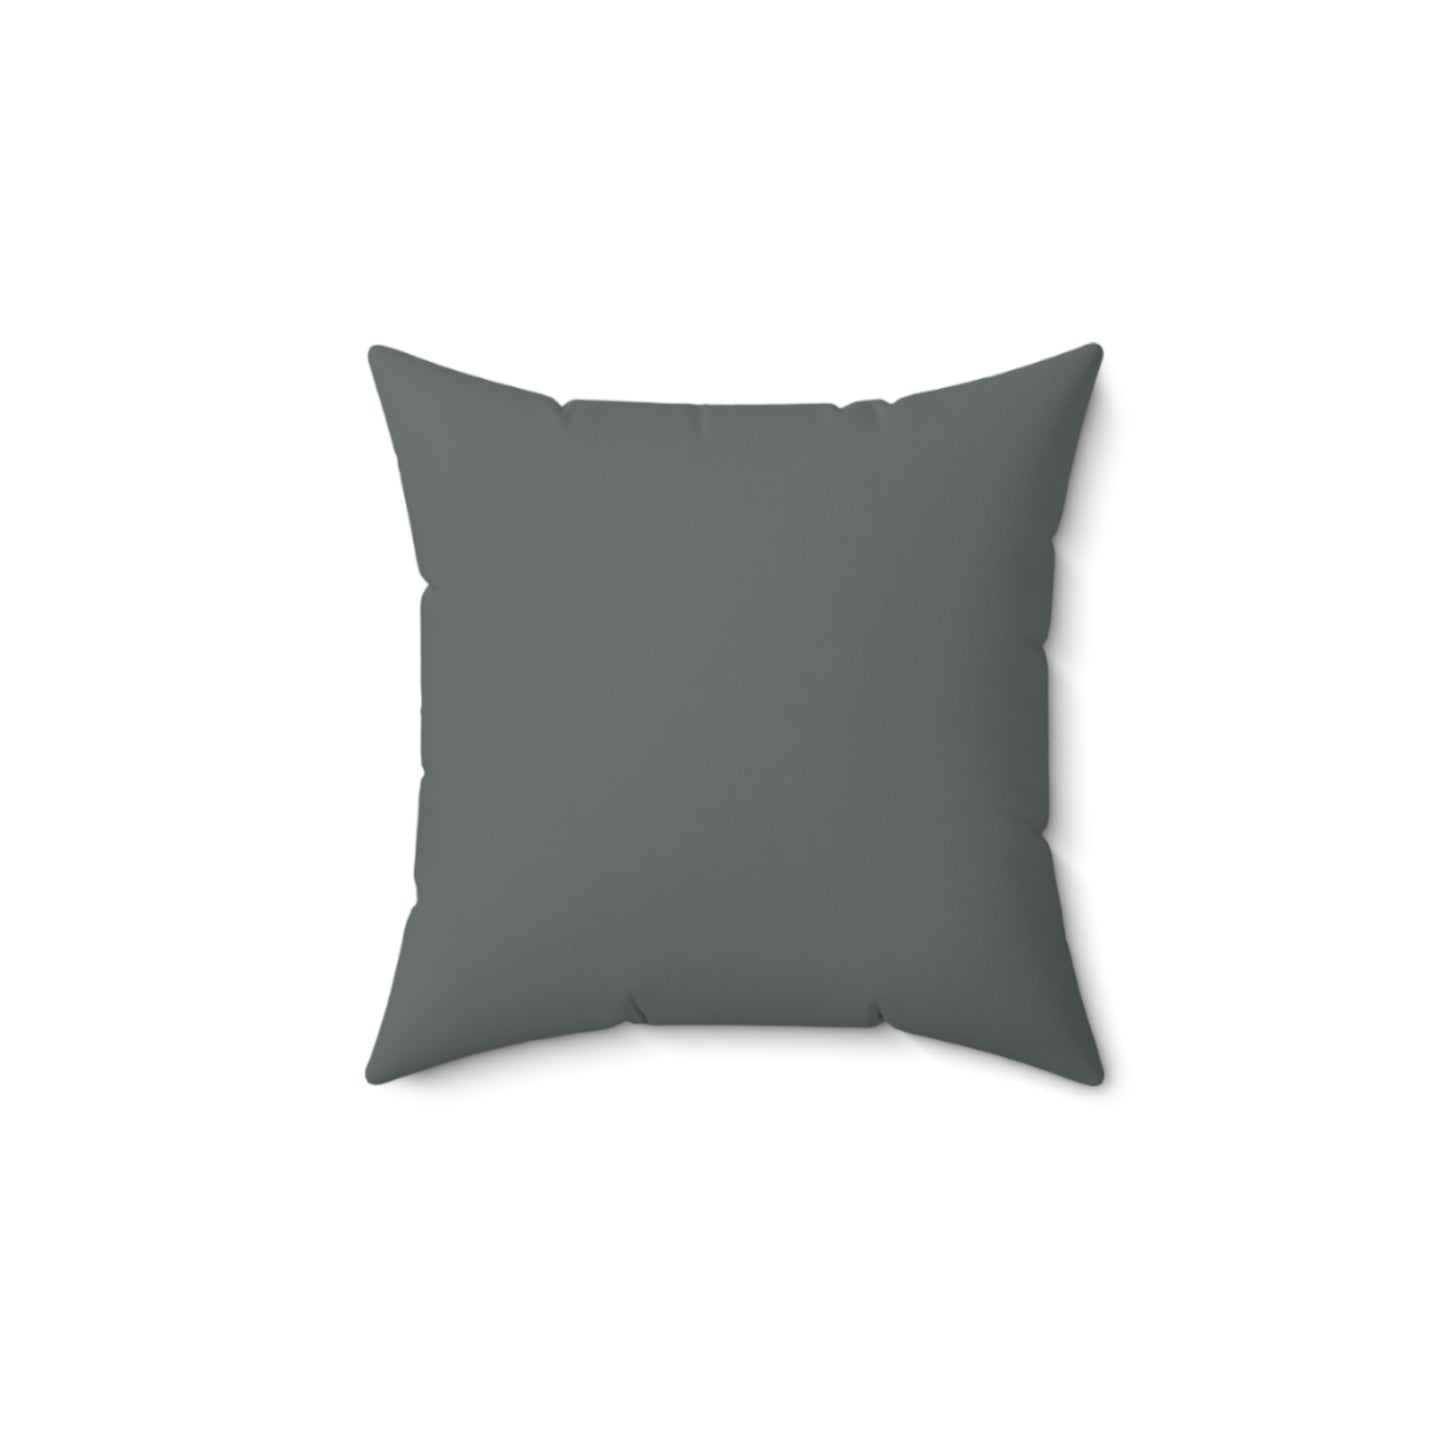 Spun Polyester Square Pillow Case “Pooh on Dark Gray”